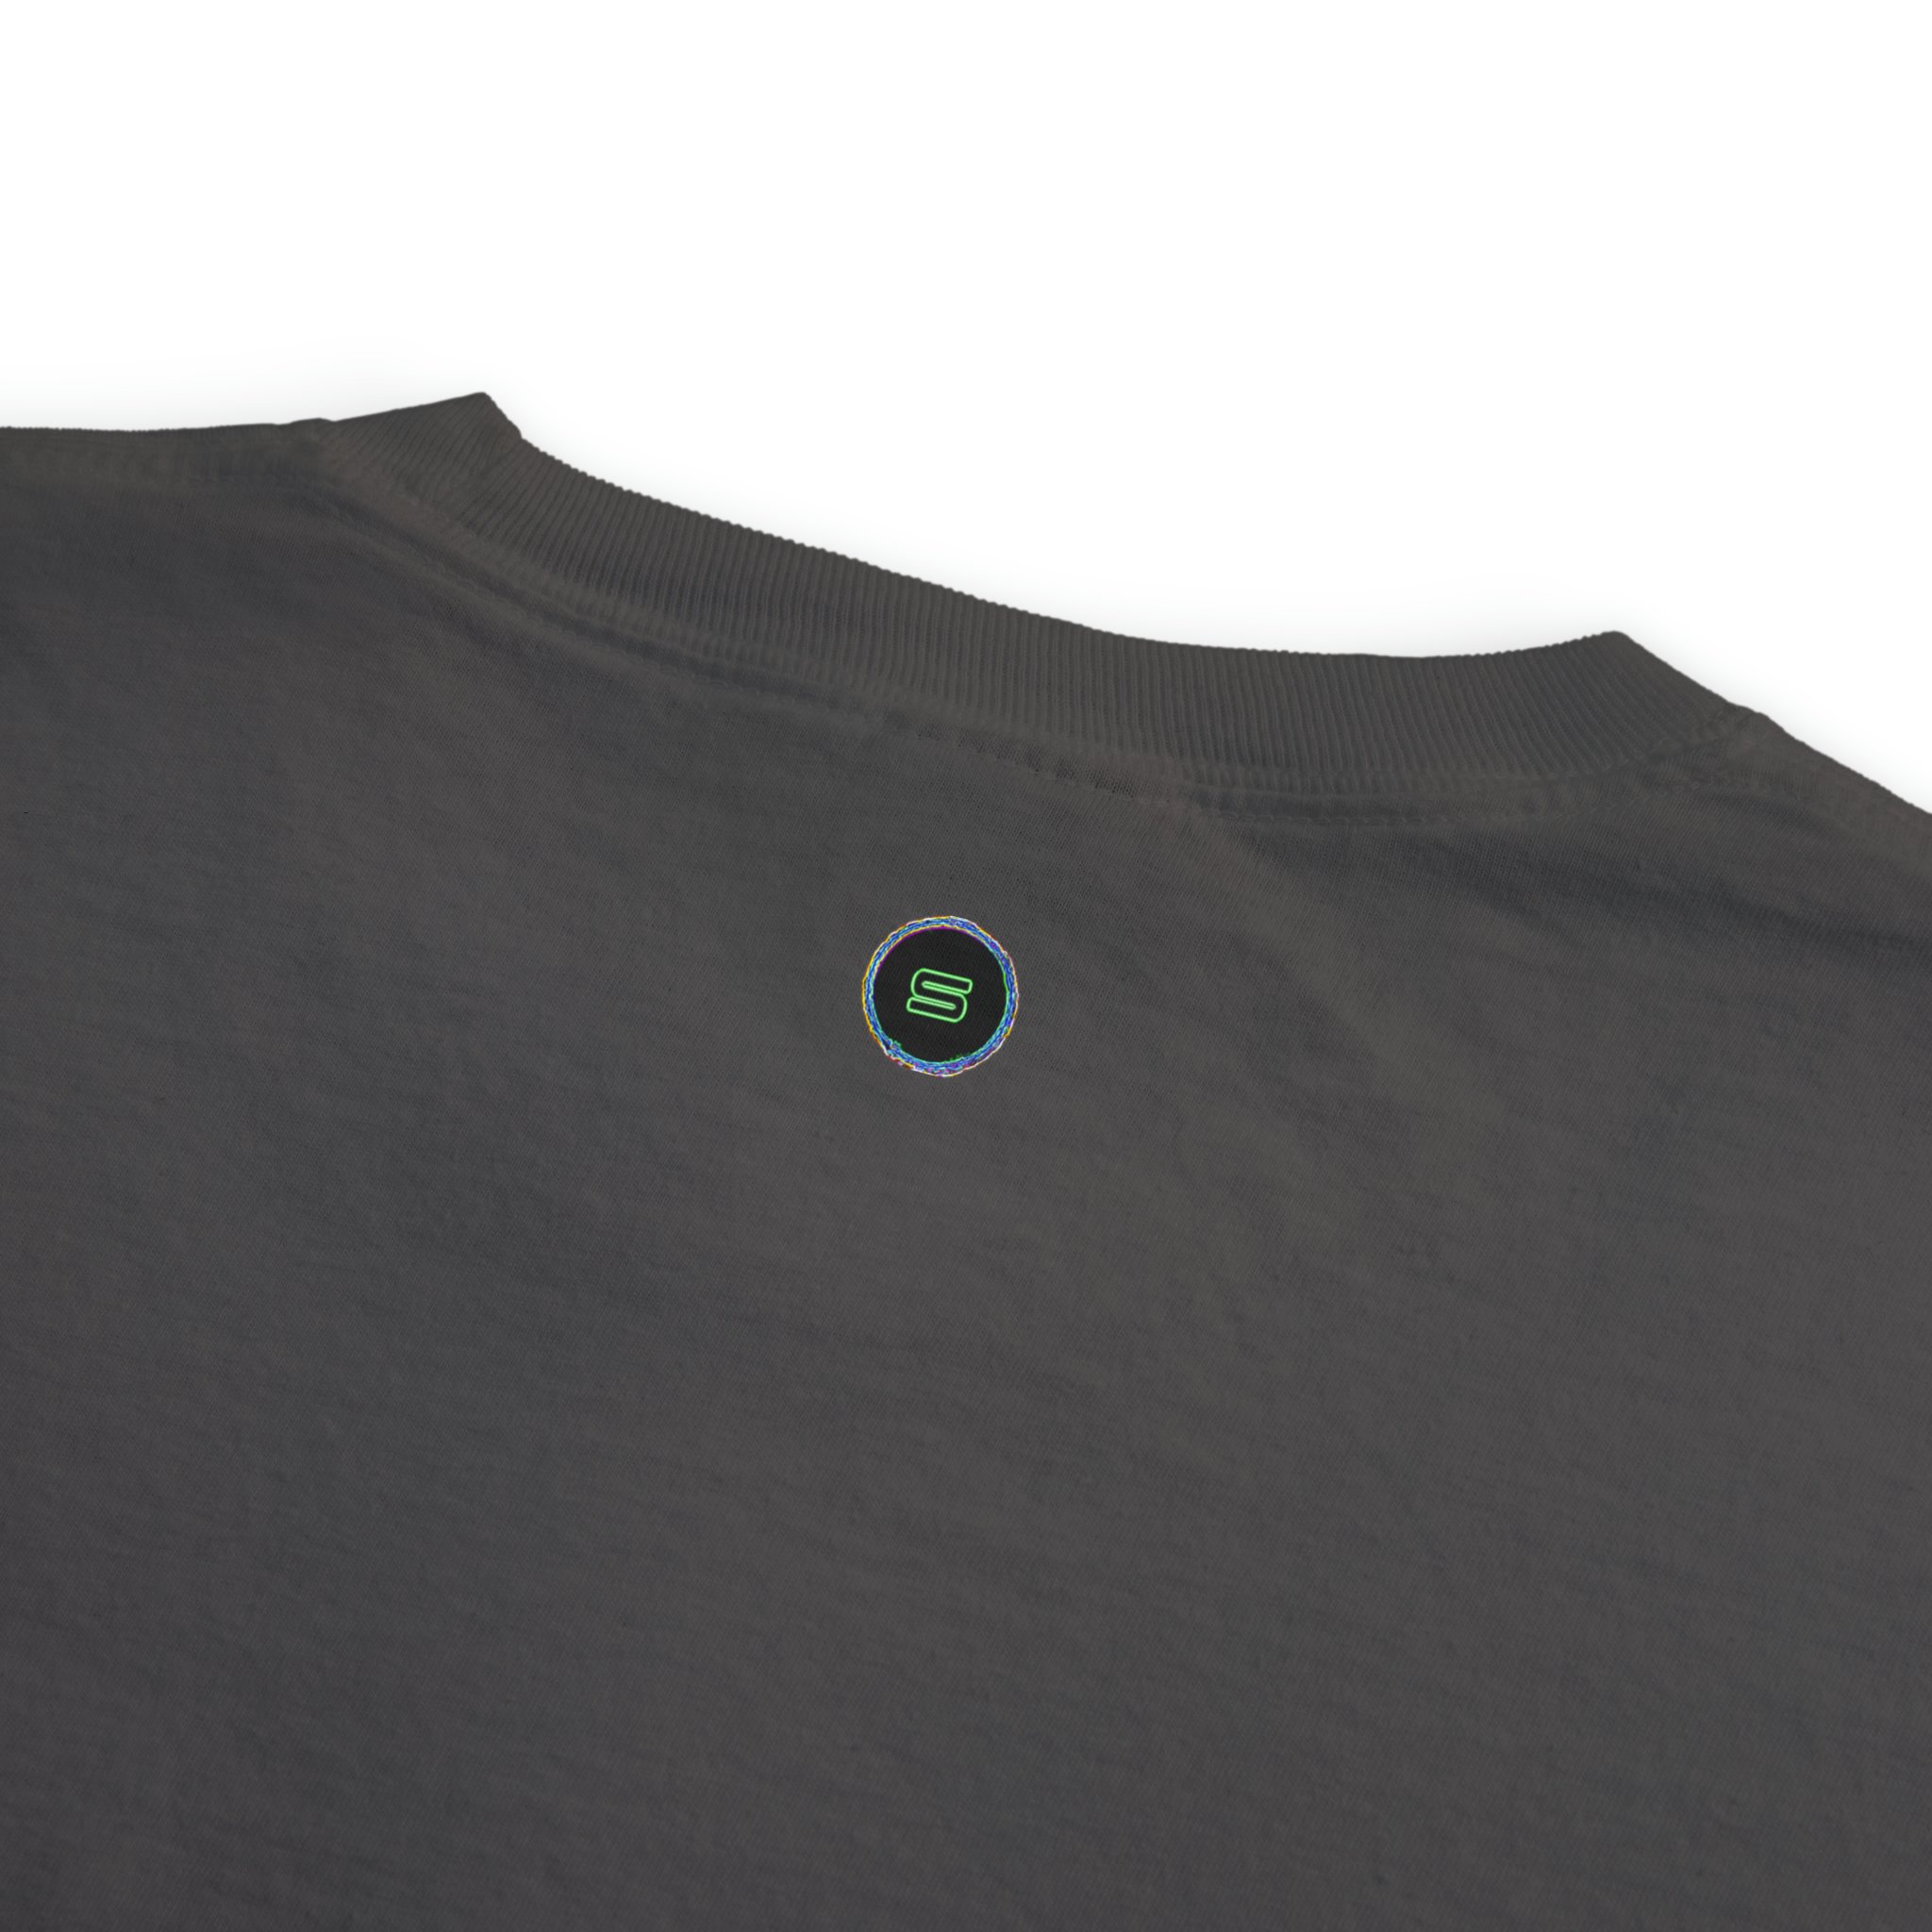 Unisex Pocket T-Shirt #8 Back Collar Closeup (1)